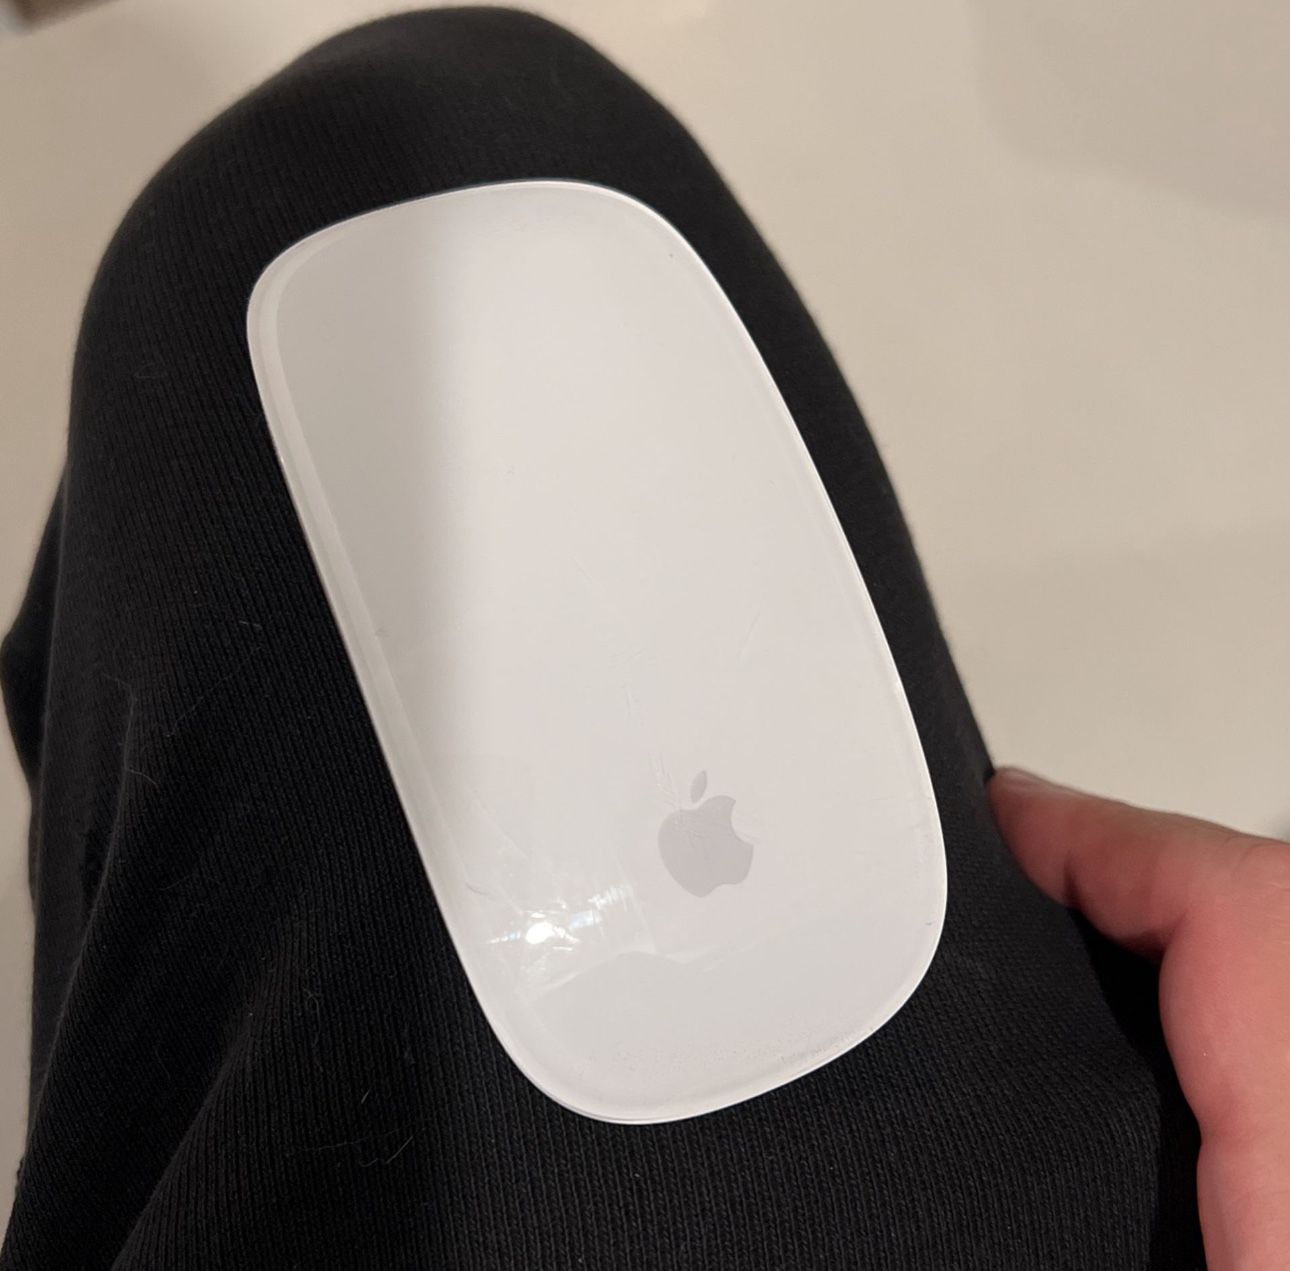 Apple Wireless Magic Mouse